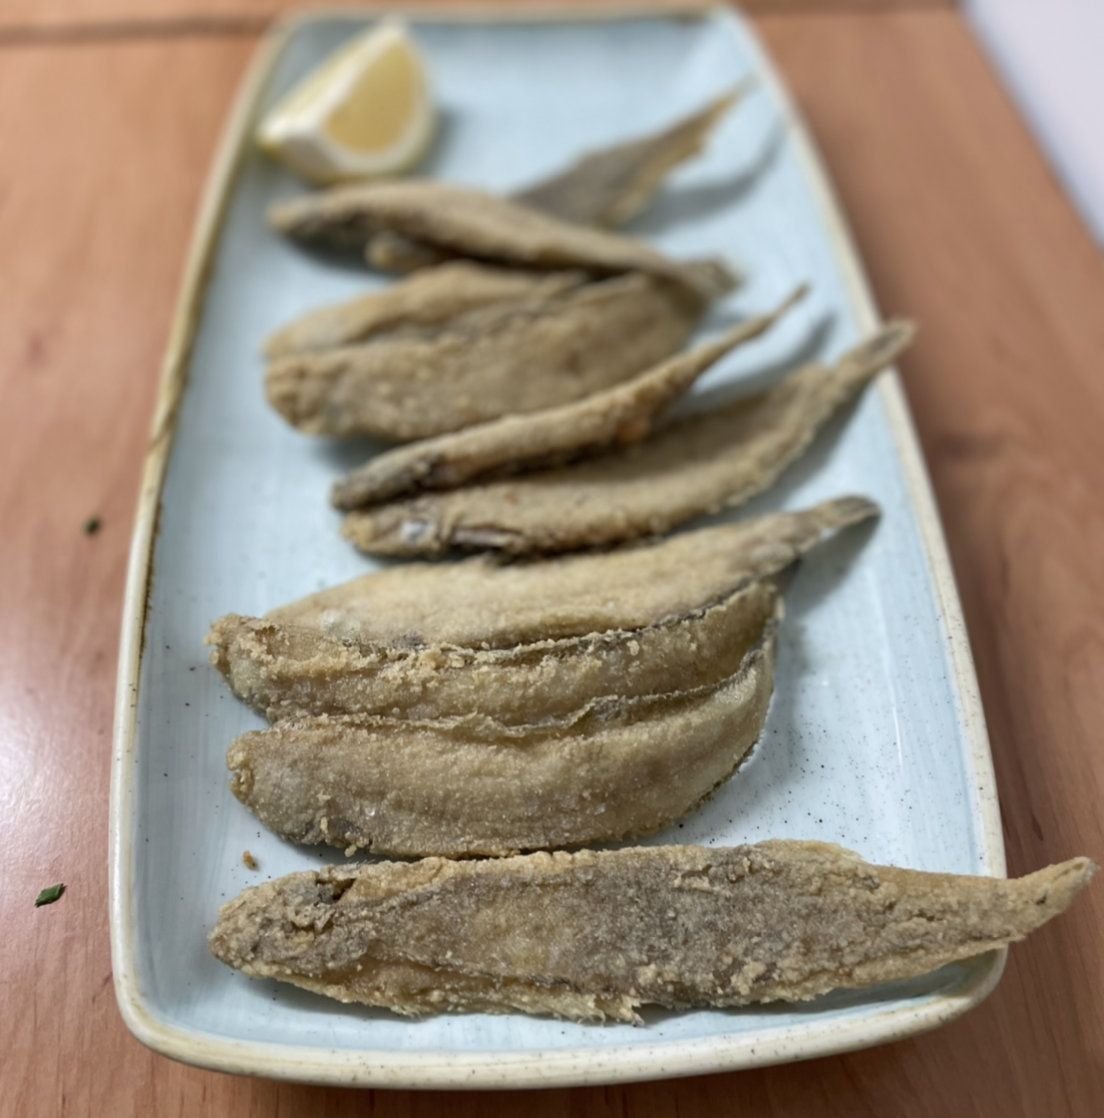 Fried wedge sole from Sanlúcar